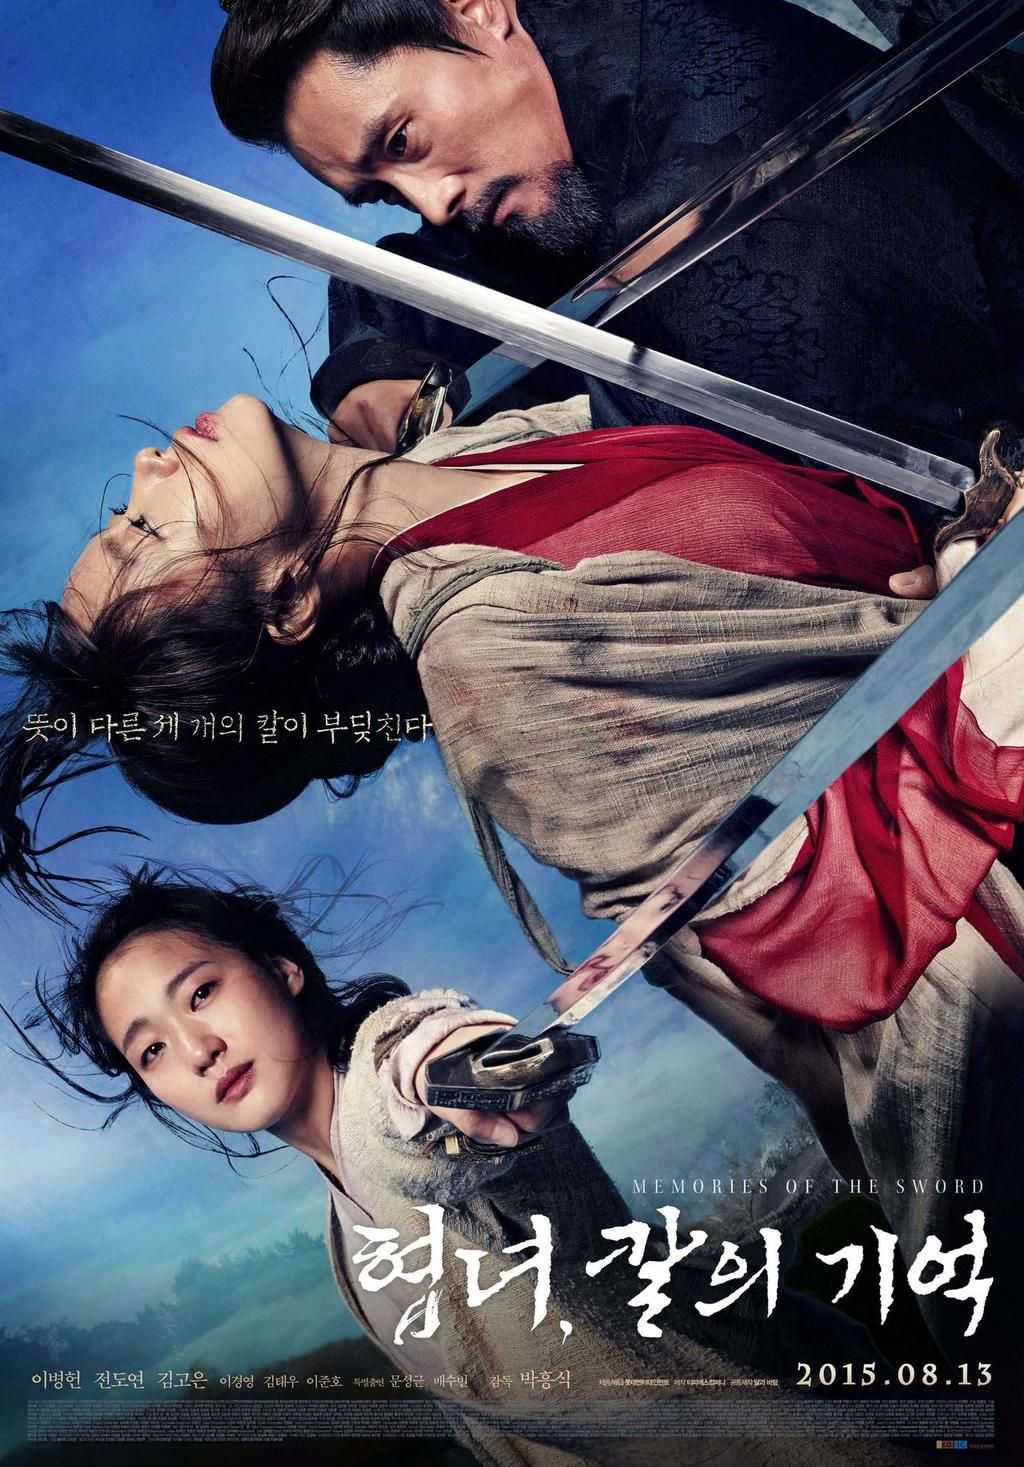 Real korean movie subtitle download english